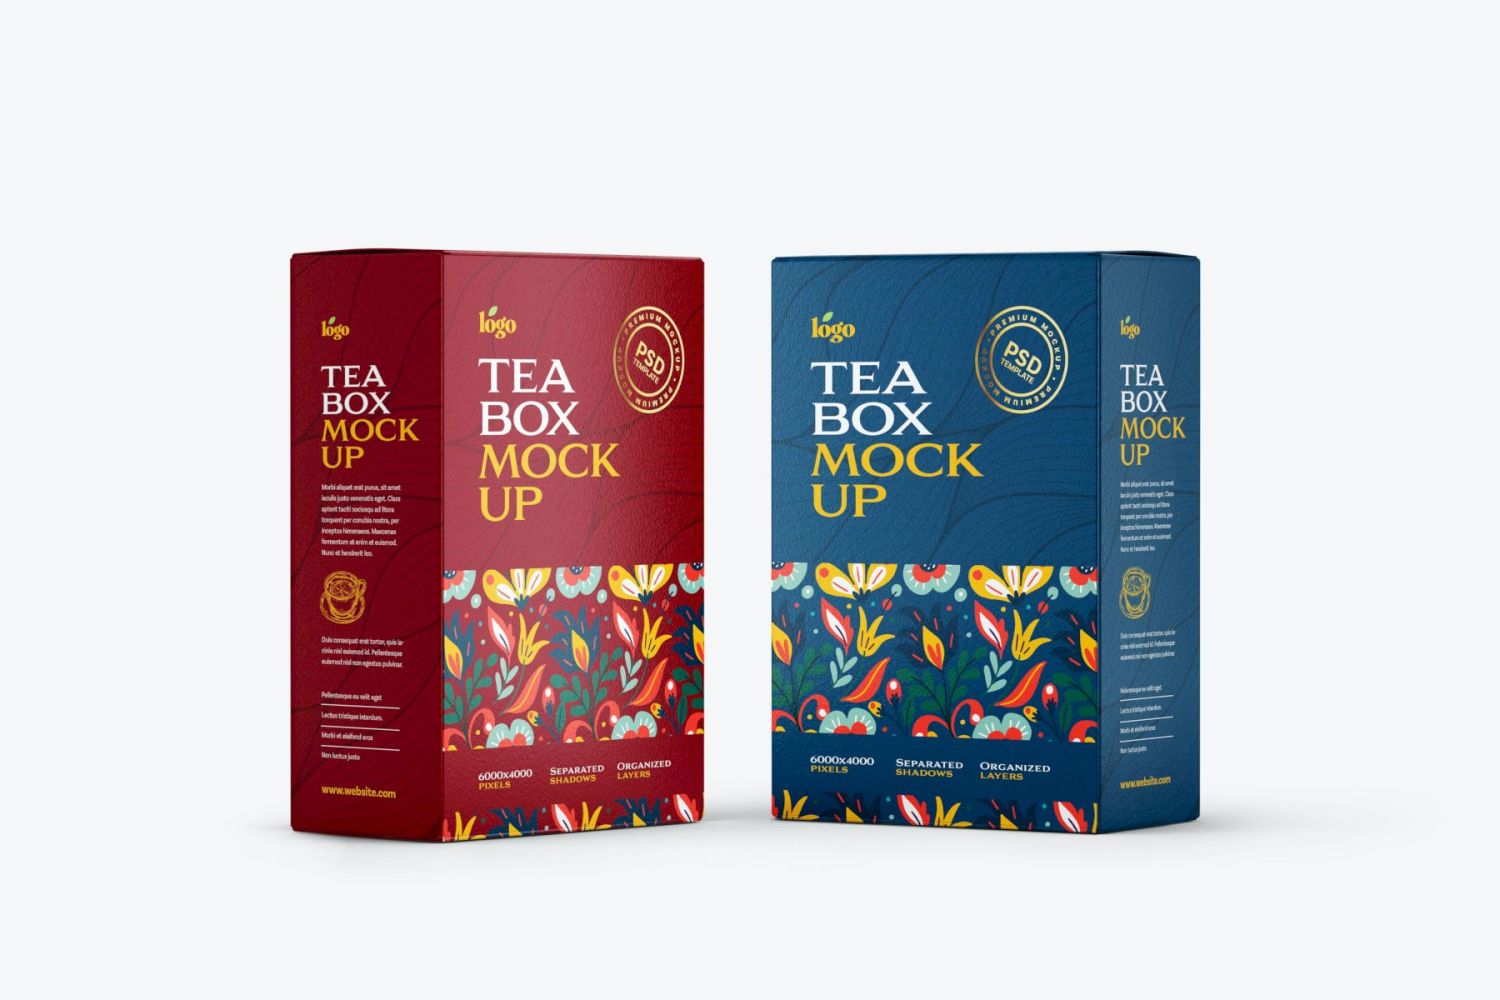 茶盒包装样机套装 Tea Box Packaging Mockup Set插图8